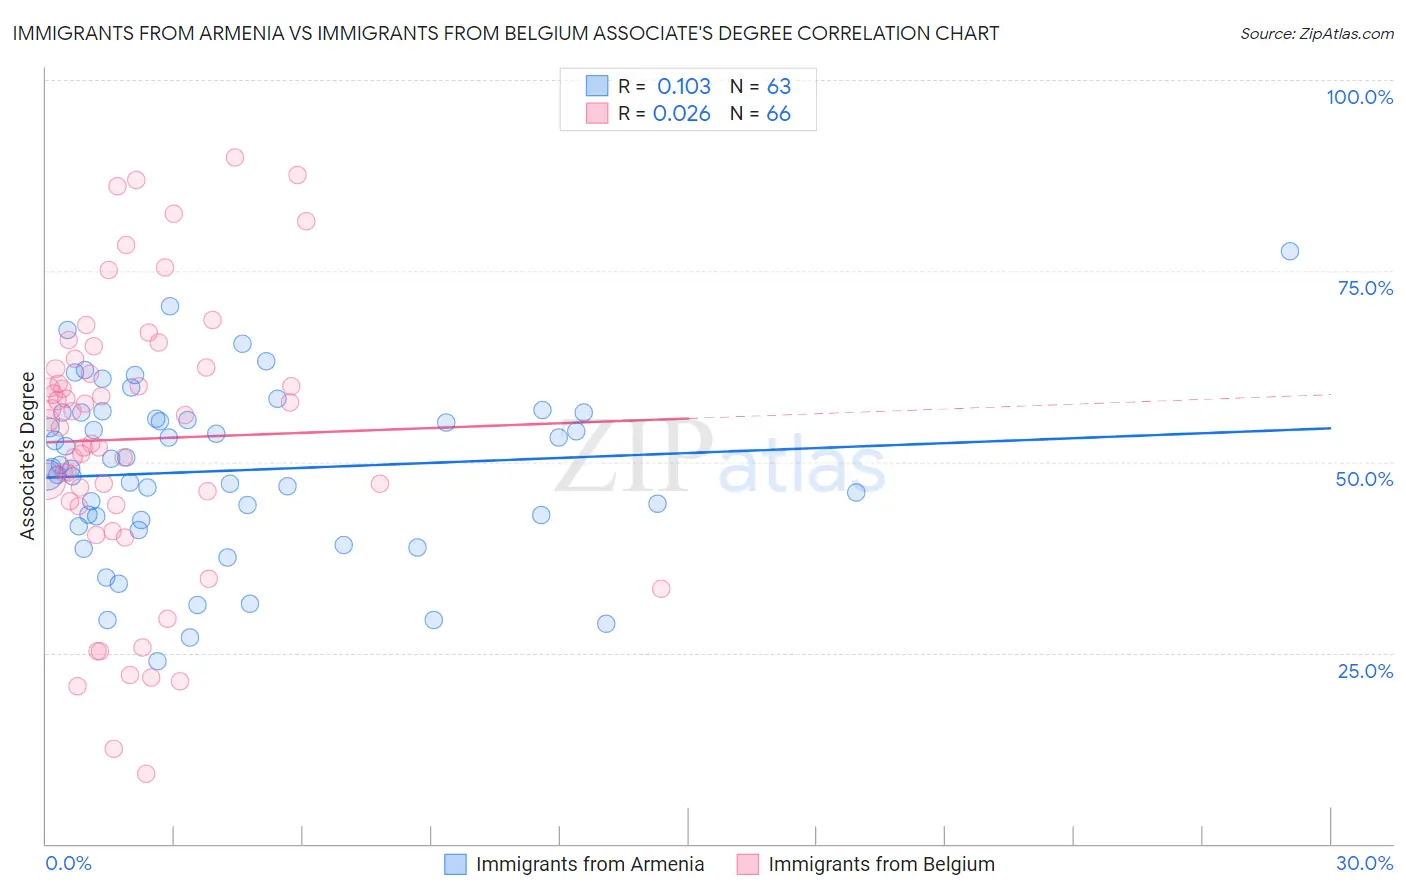 Immigrants from Armenia vs Immigrants from Belgium Associate's Degree